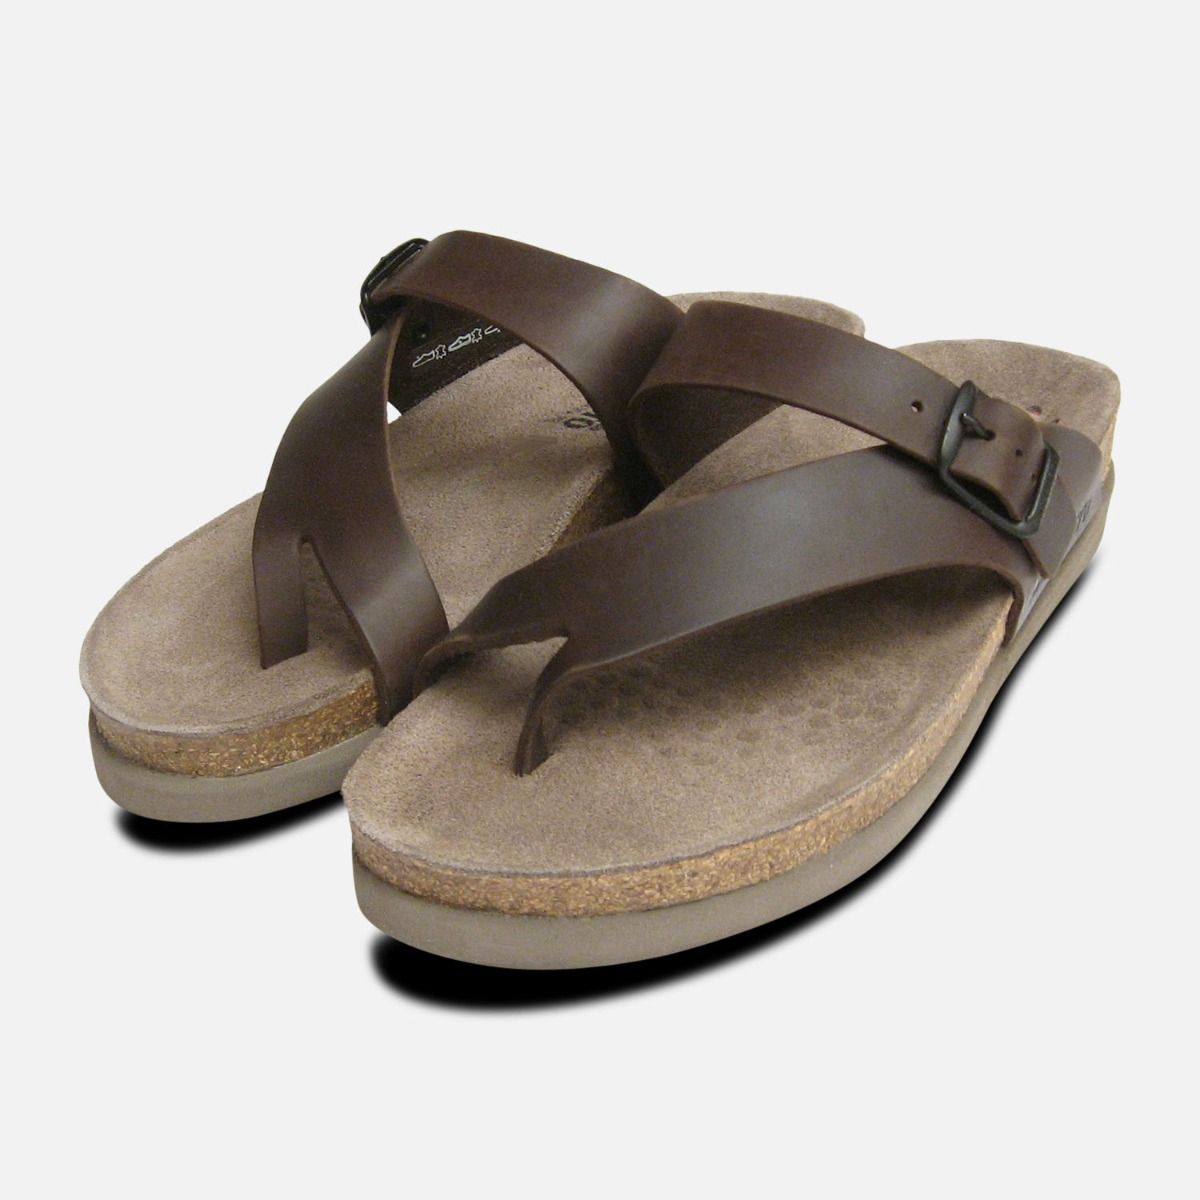 mephisto sandals on sale